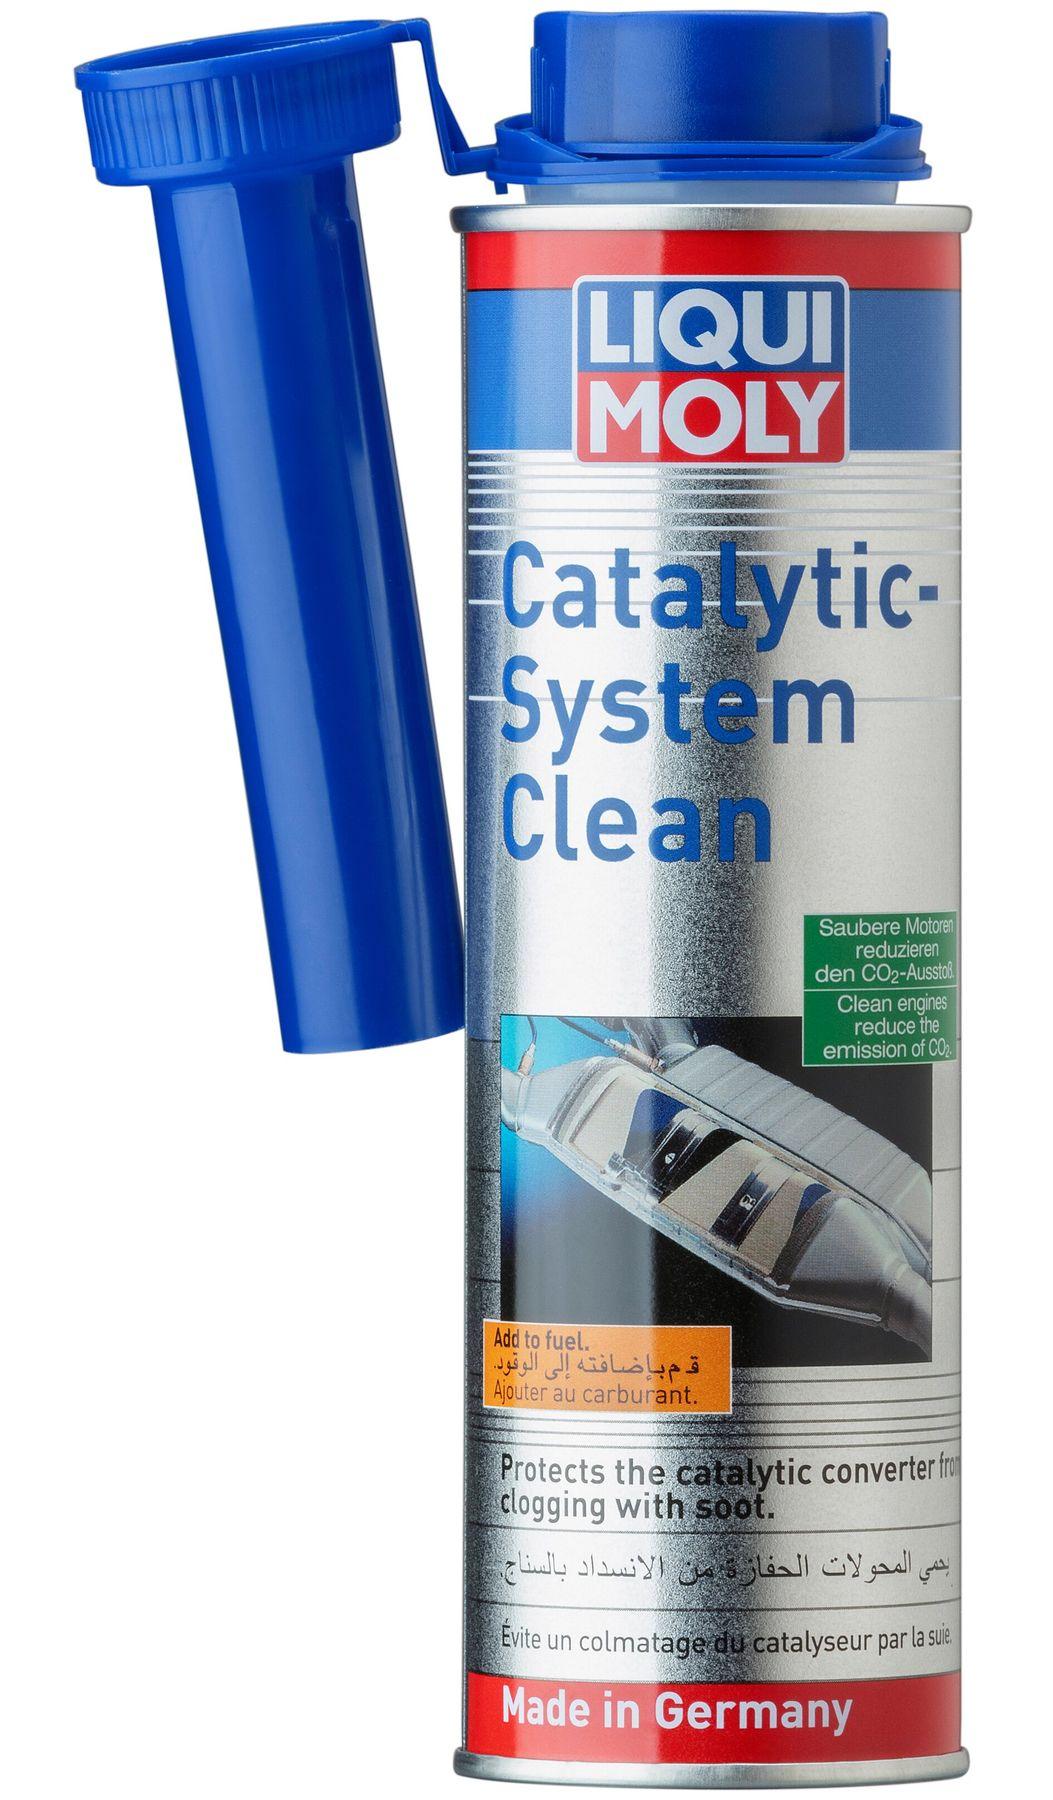 Liqui Moly Catalytic-System Clean - очиститель катализатора, 300 мл (7110)